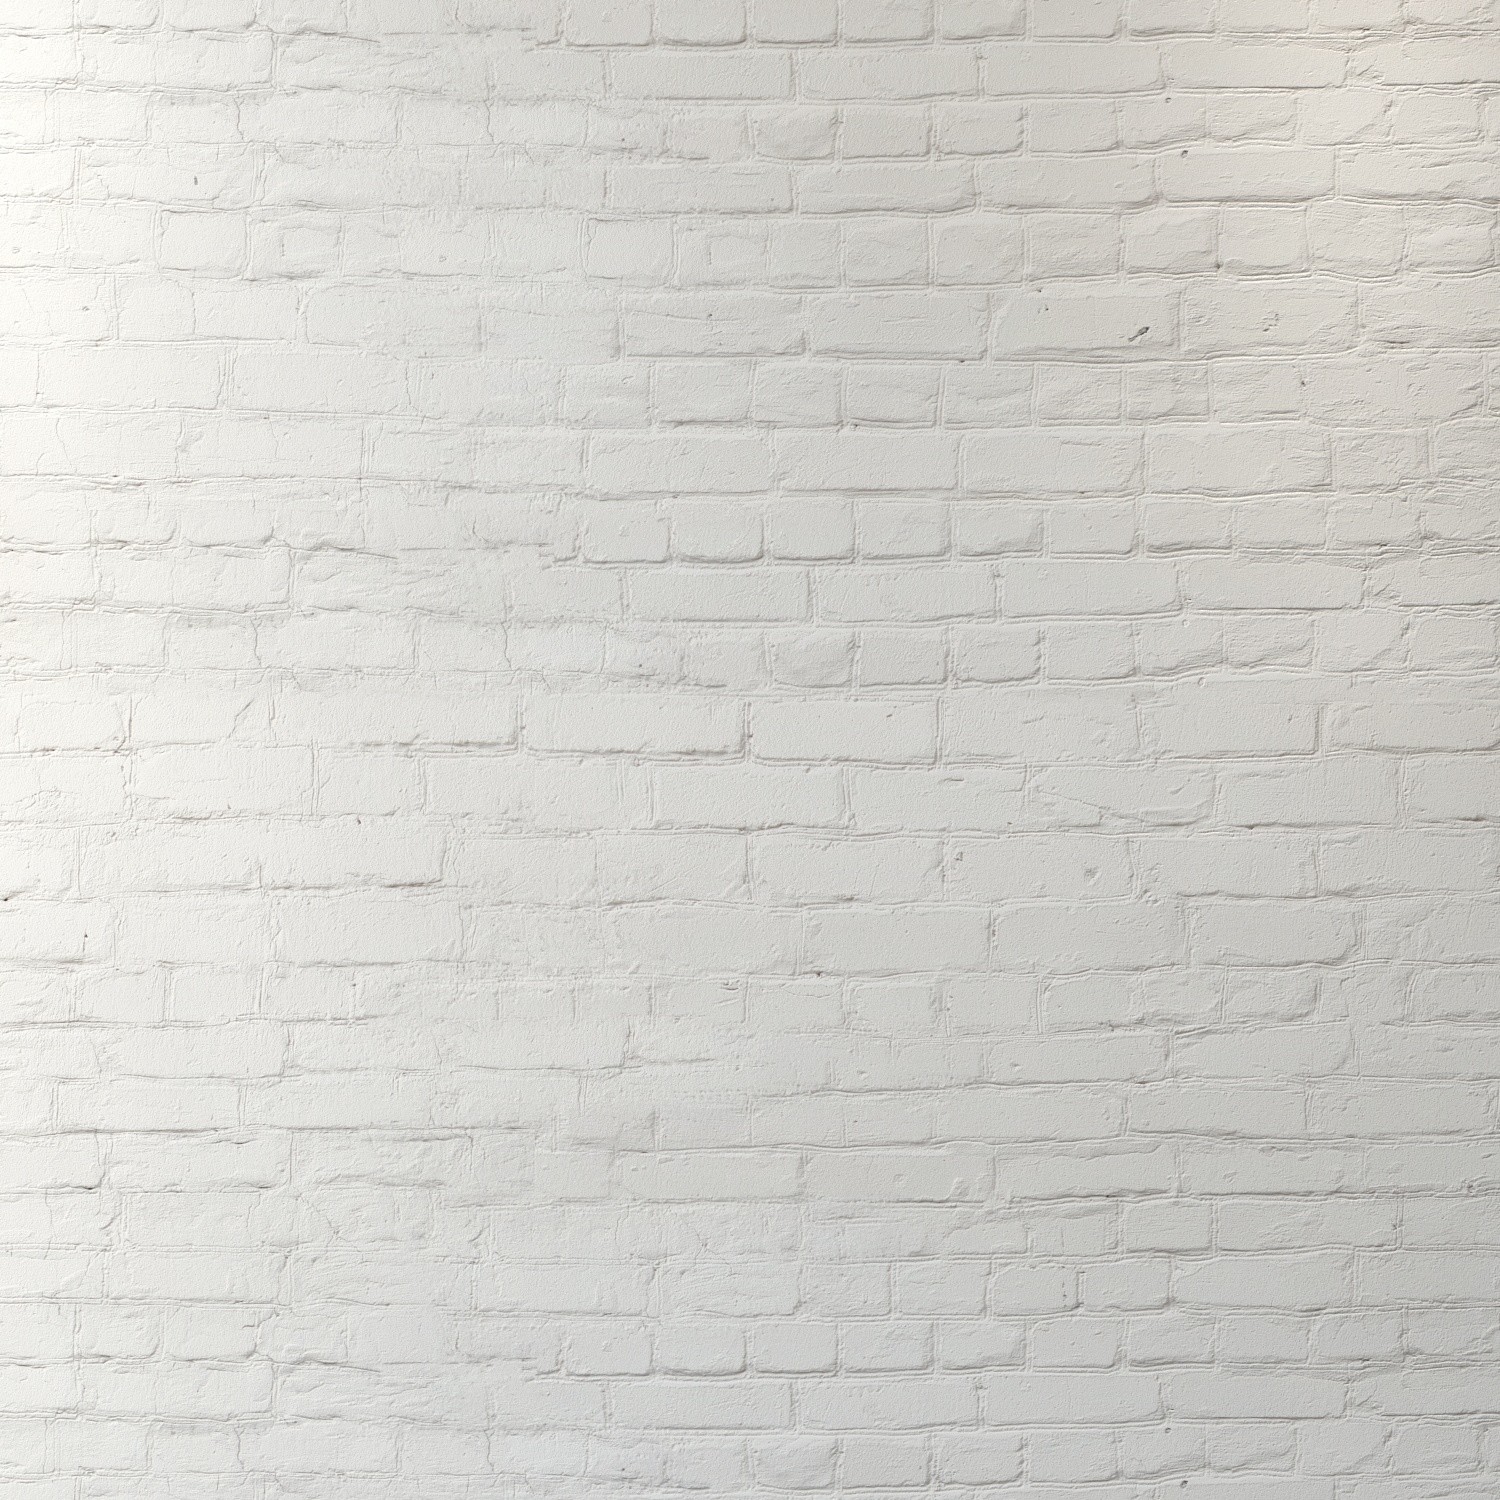 ArtStation - Aged brick walls of white brick | Resources